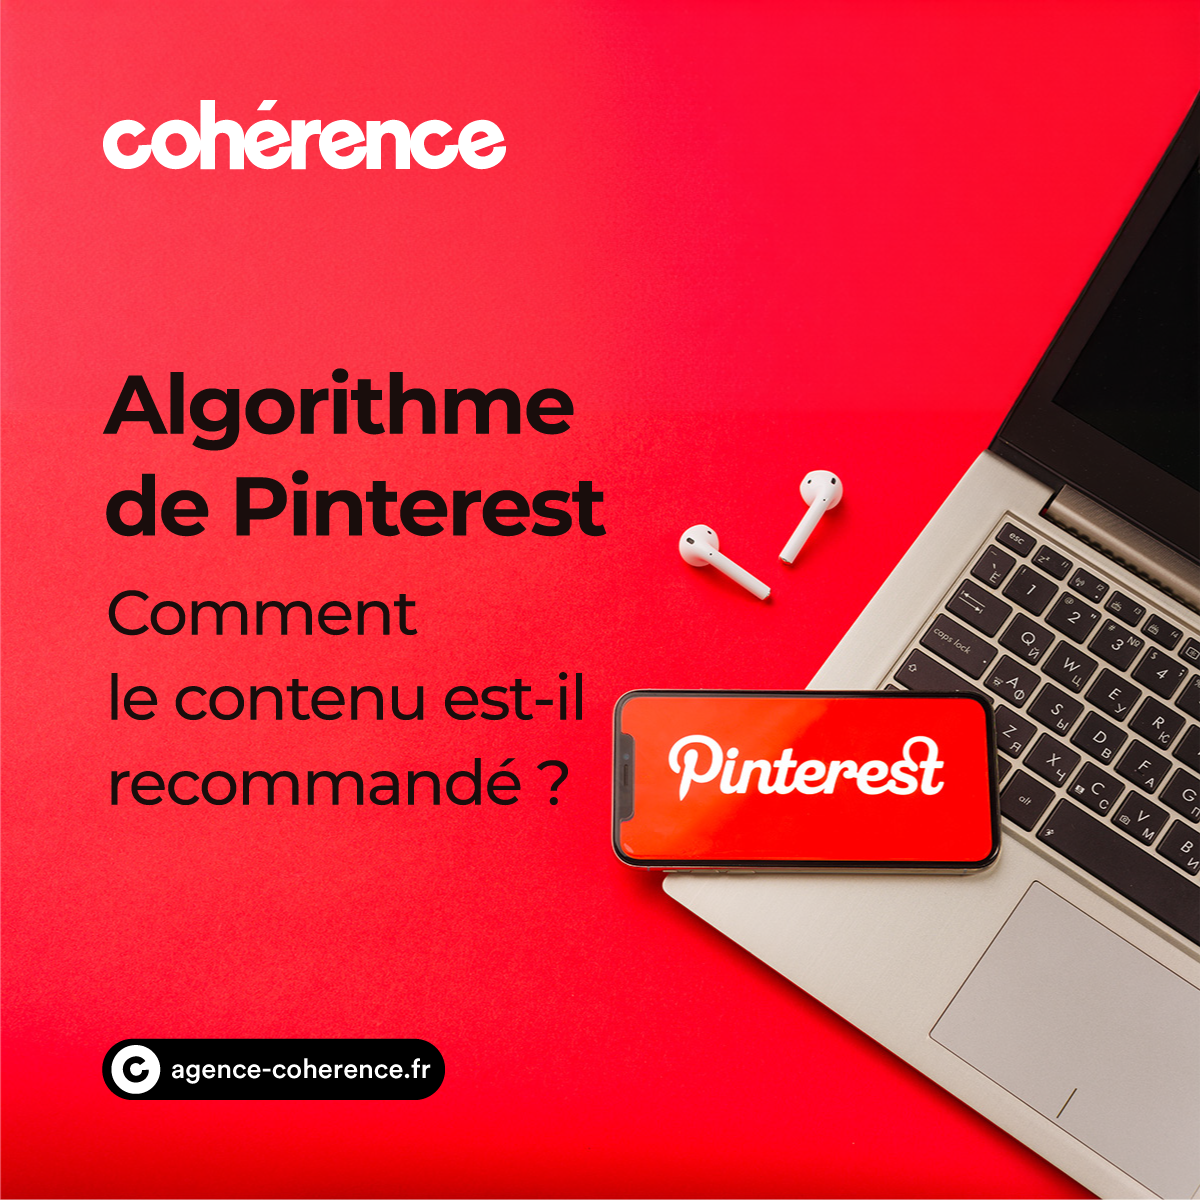 Coherence Agence Digitale Algorithme De Pinterest